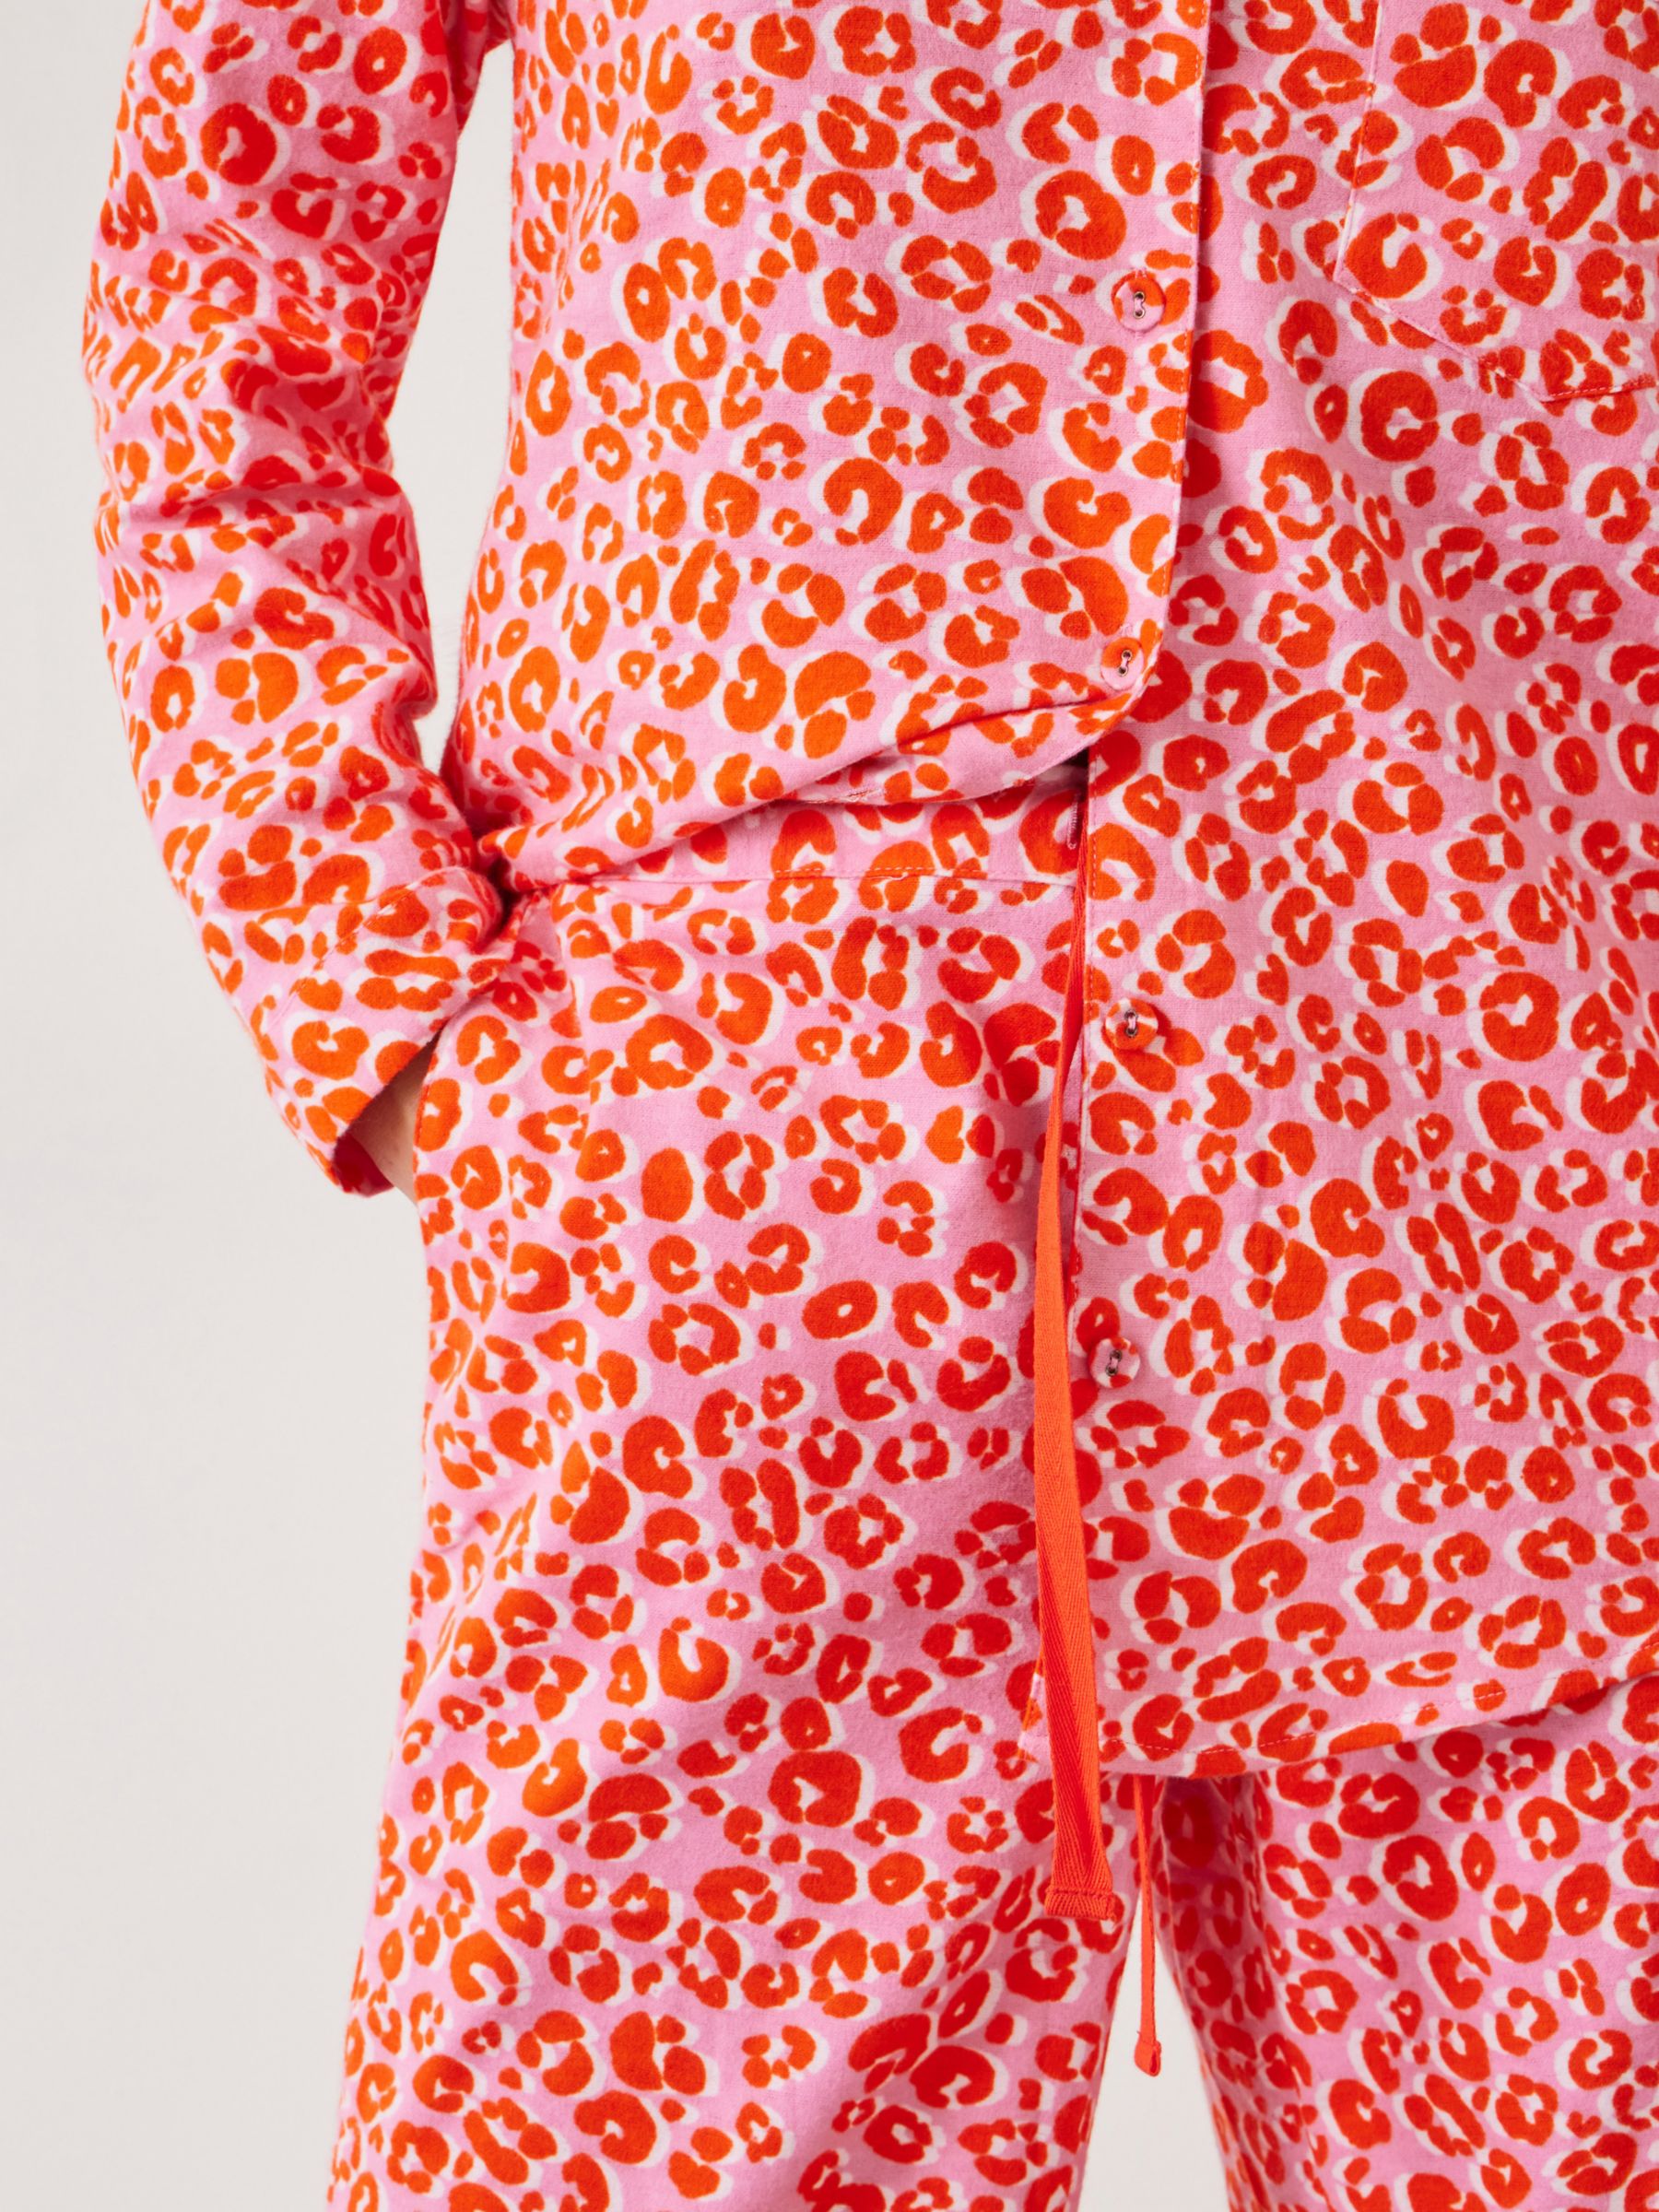 Buy HUSH Liv Leopard Print Shirt Pyjama Set, Pink Online at johnlewis.com